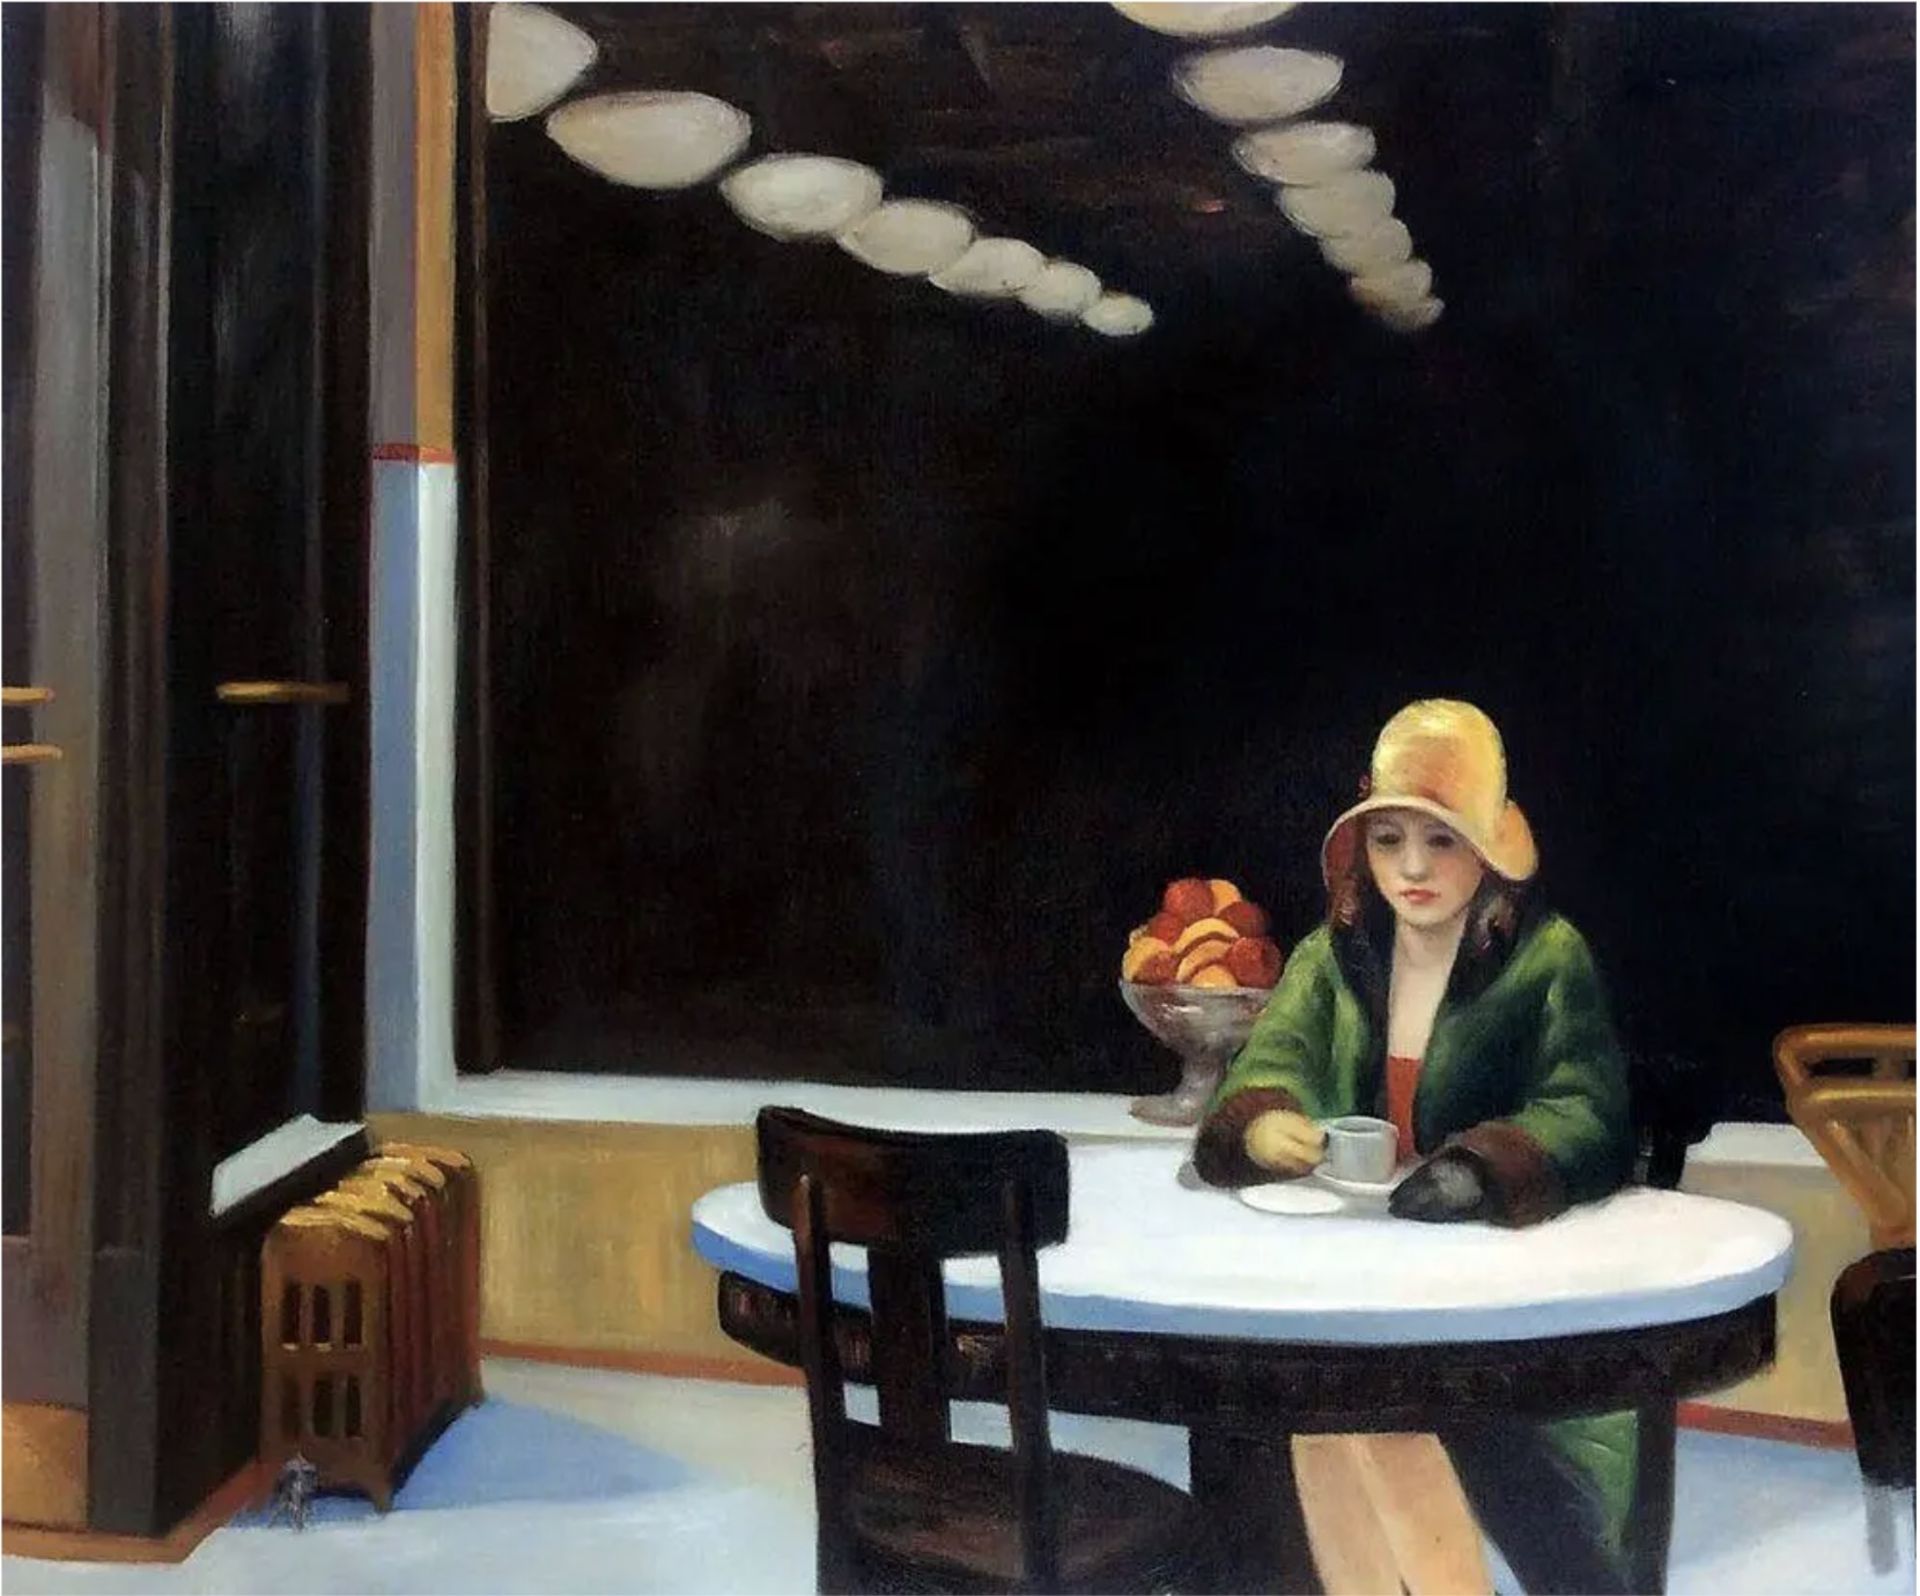 Edward Hopper "Automat" Oil Painting